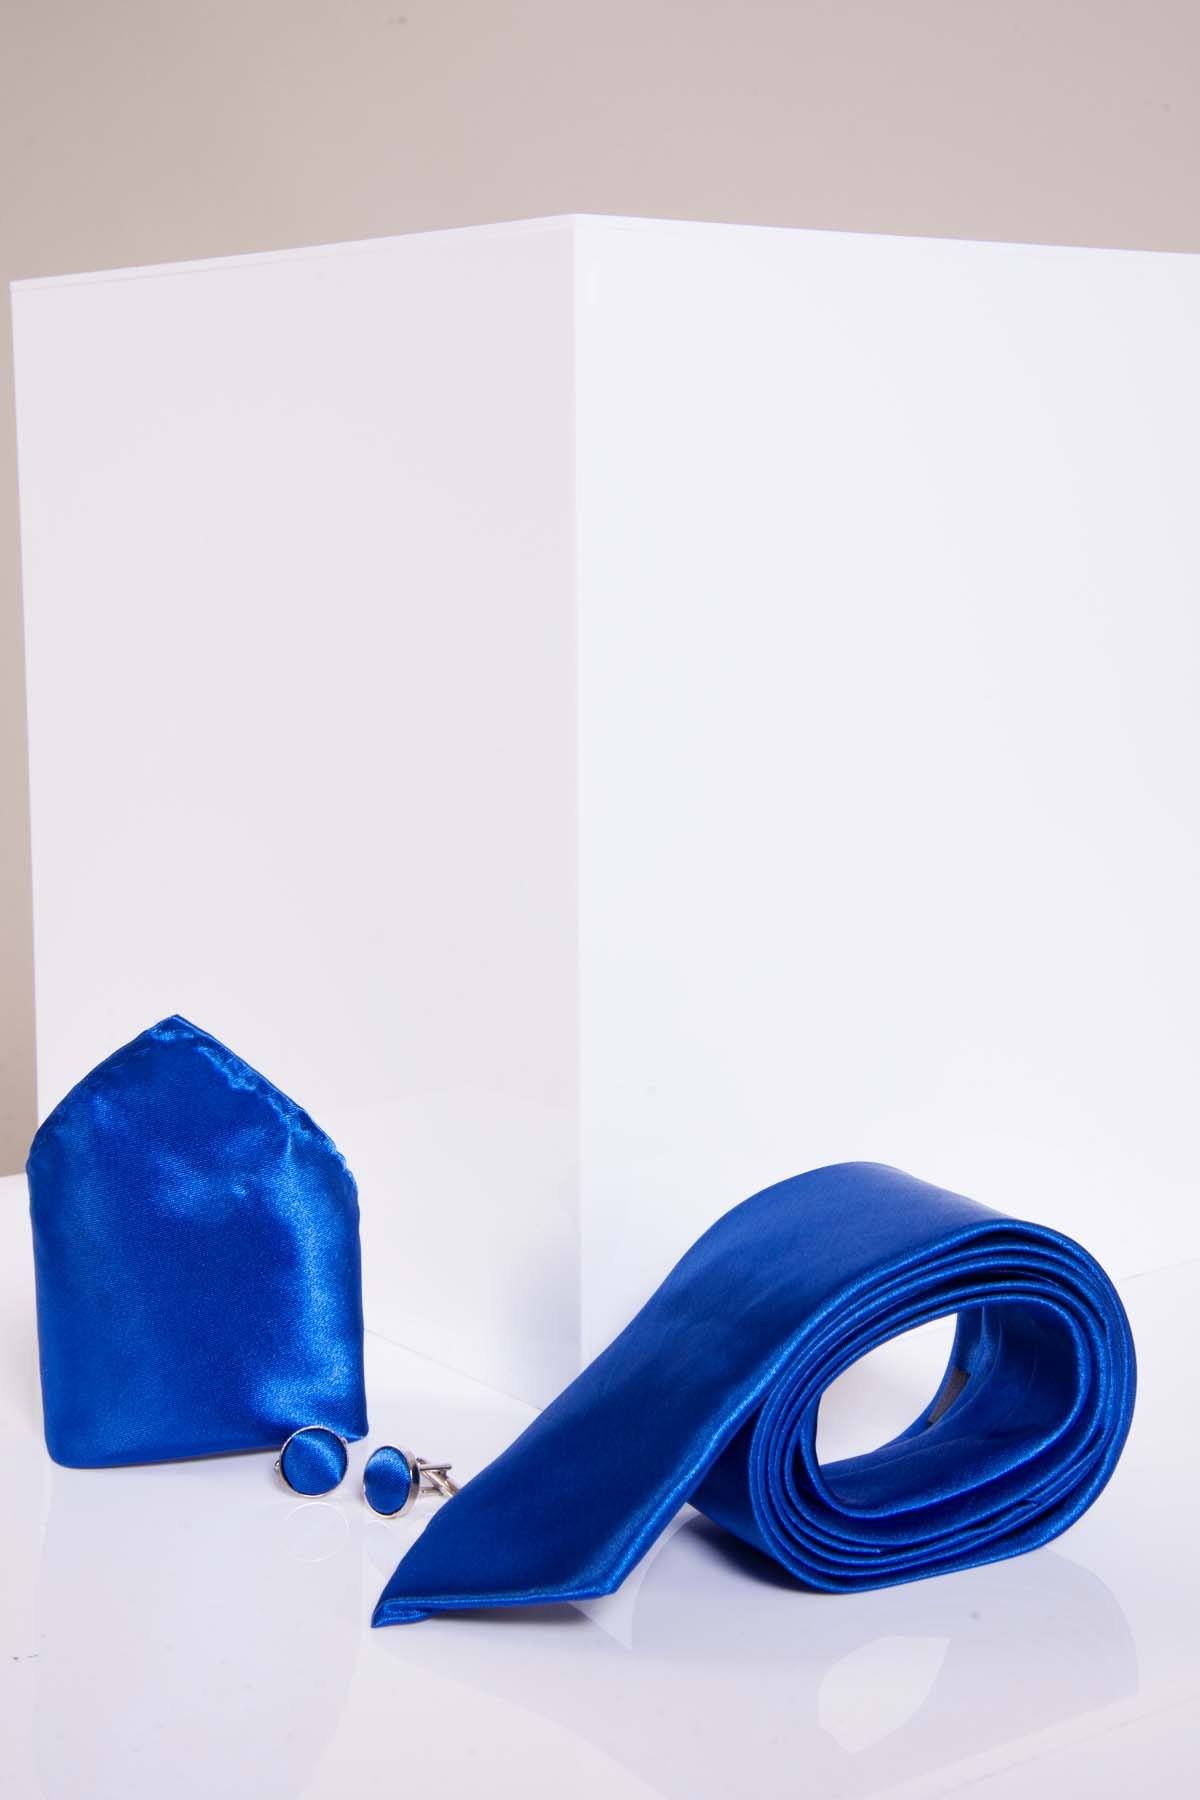 ST - Satin Tie, Cufflink & Pocket Square Set In Royal Blue